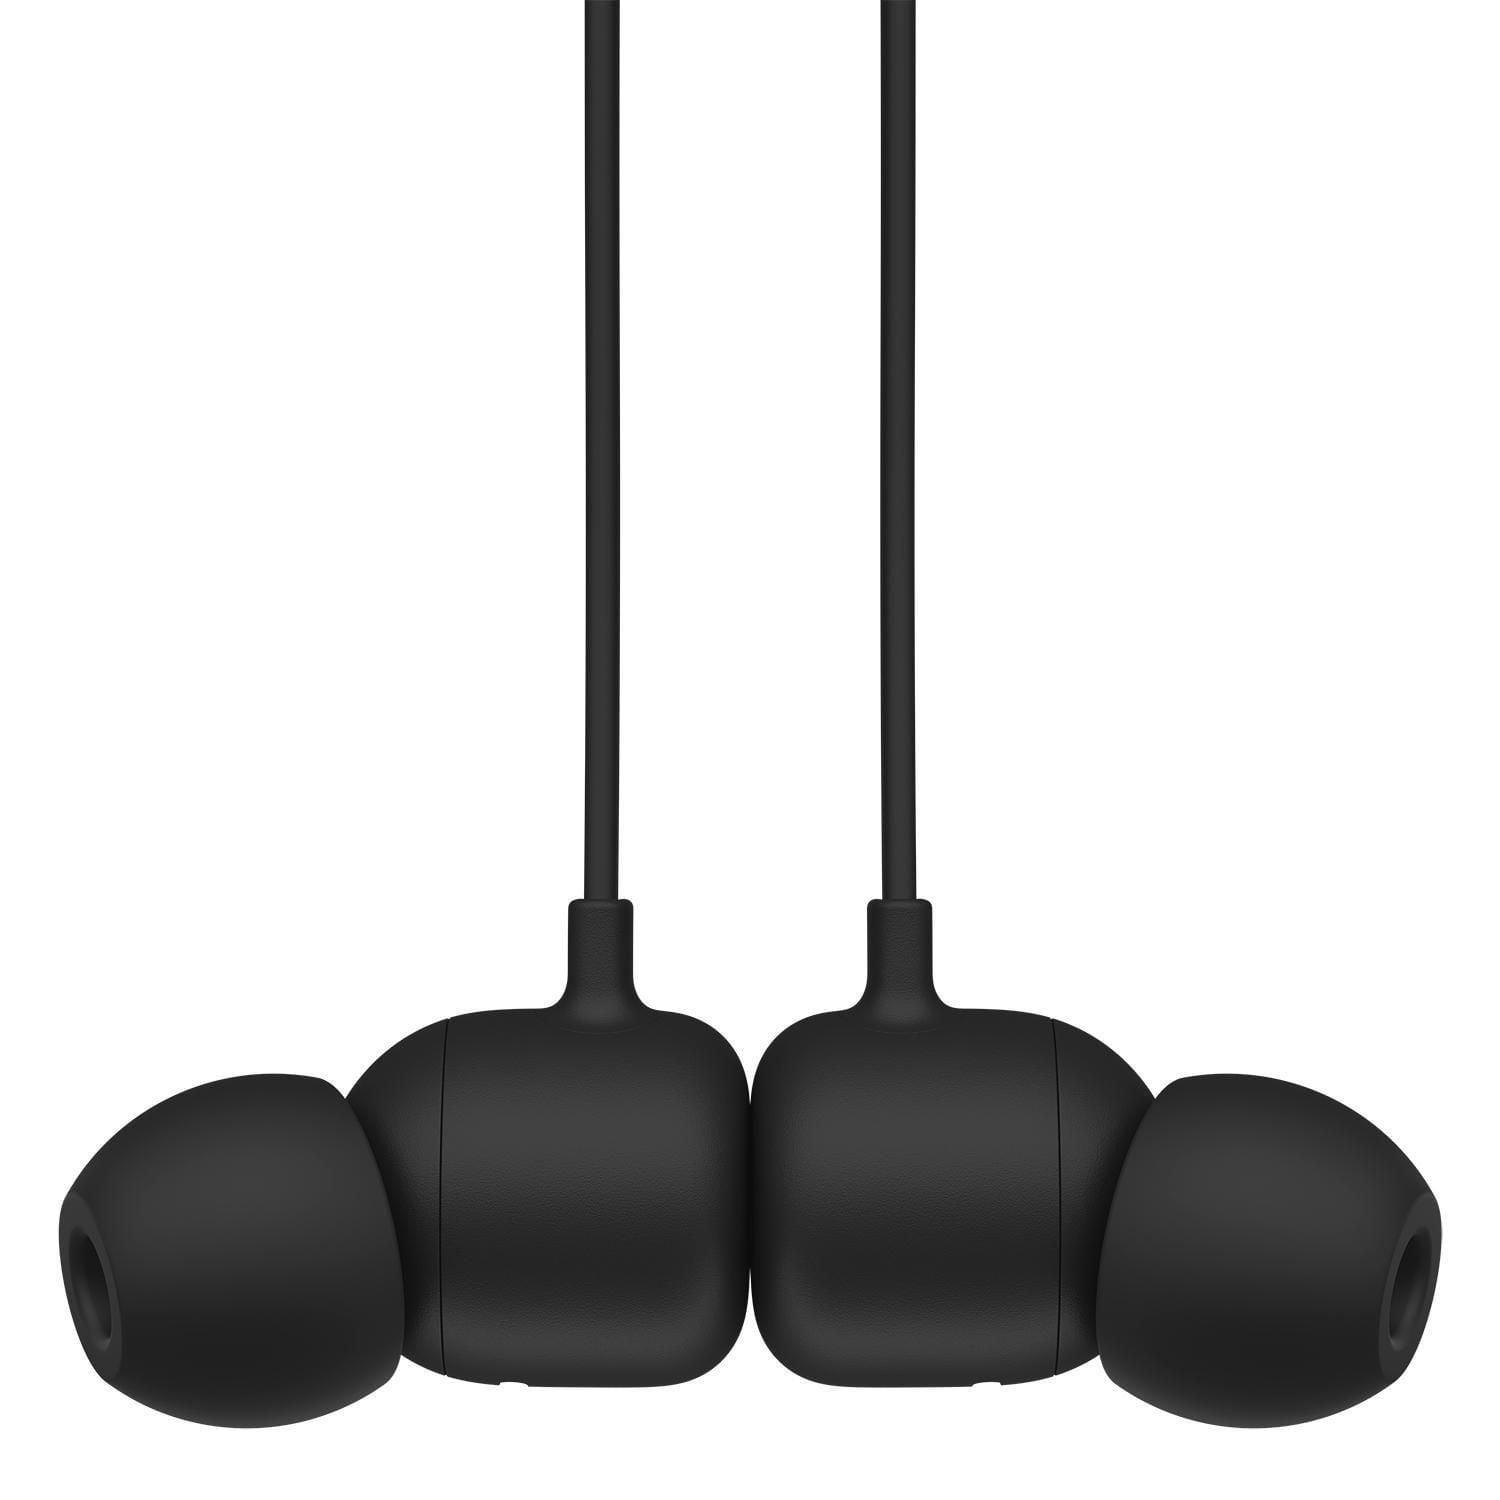 5 Core Wireless Neckband Bluetooth Headphones 12H Play